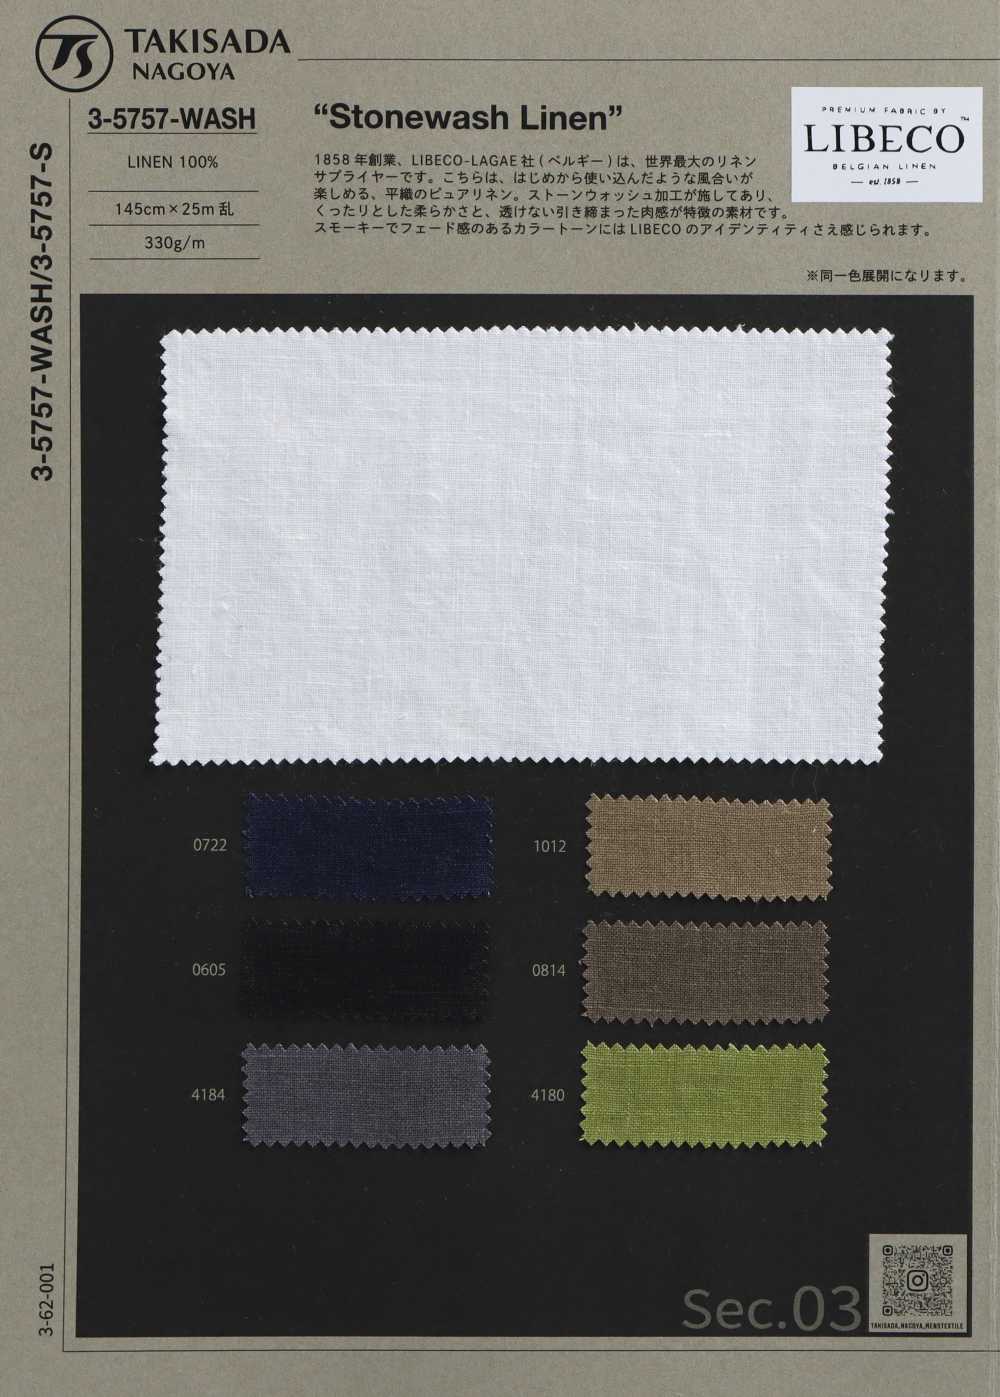 3-5757-WASH BELGIUM LINEN TROPICAL STONEWASH LIN LIBECO Belgian Linen Lin Tropical Soft Stone Wash[Fabrication De Textile] Takisada Nagoya